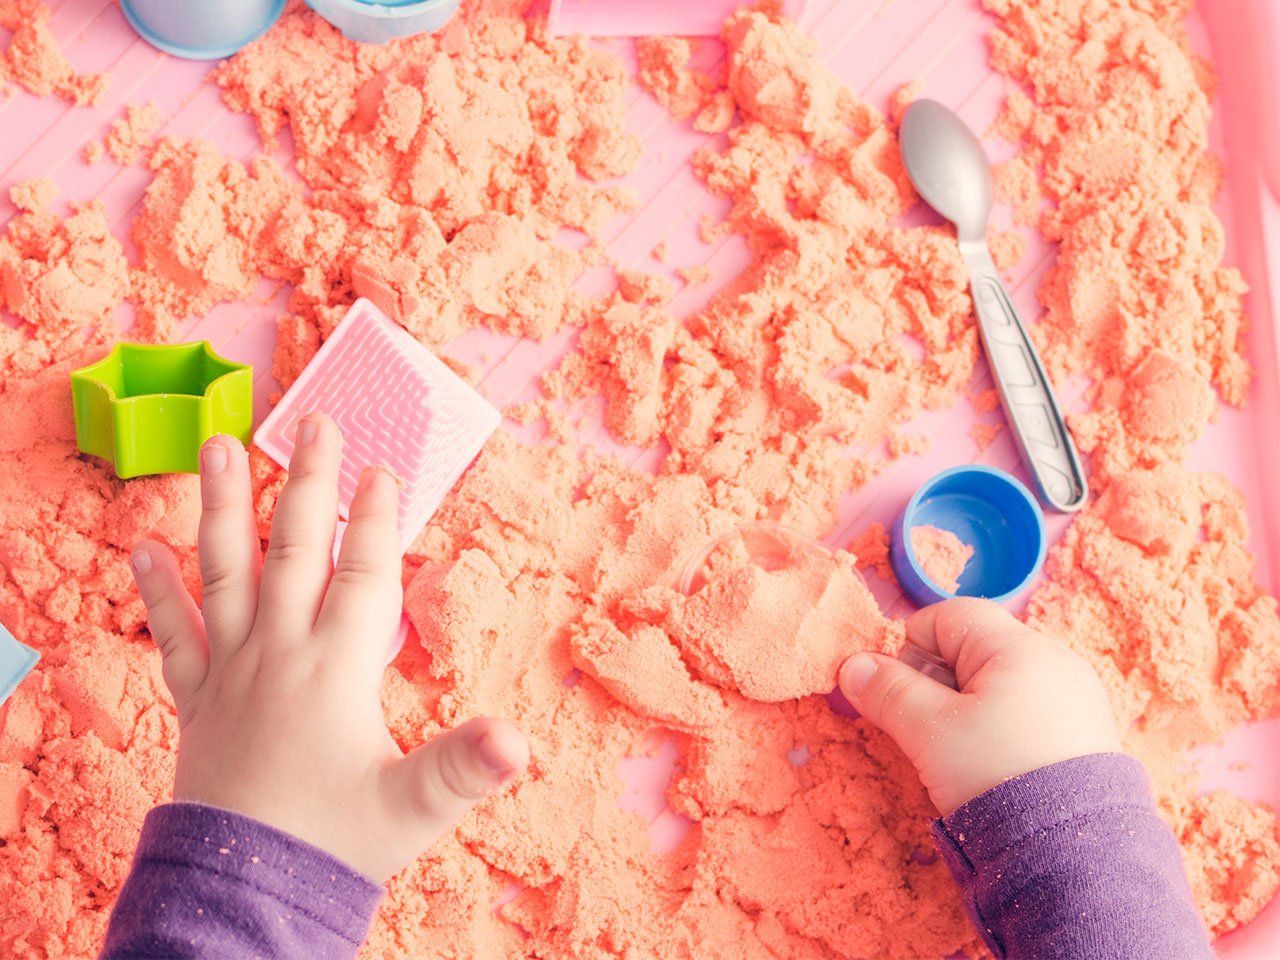 7 fun sensory play ideas to encourage your child's development